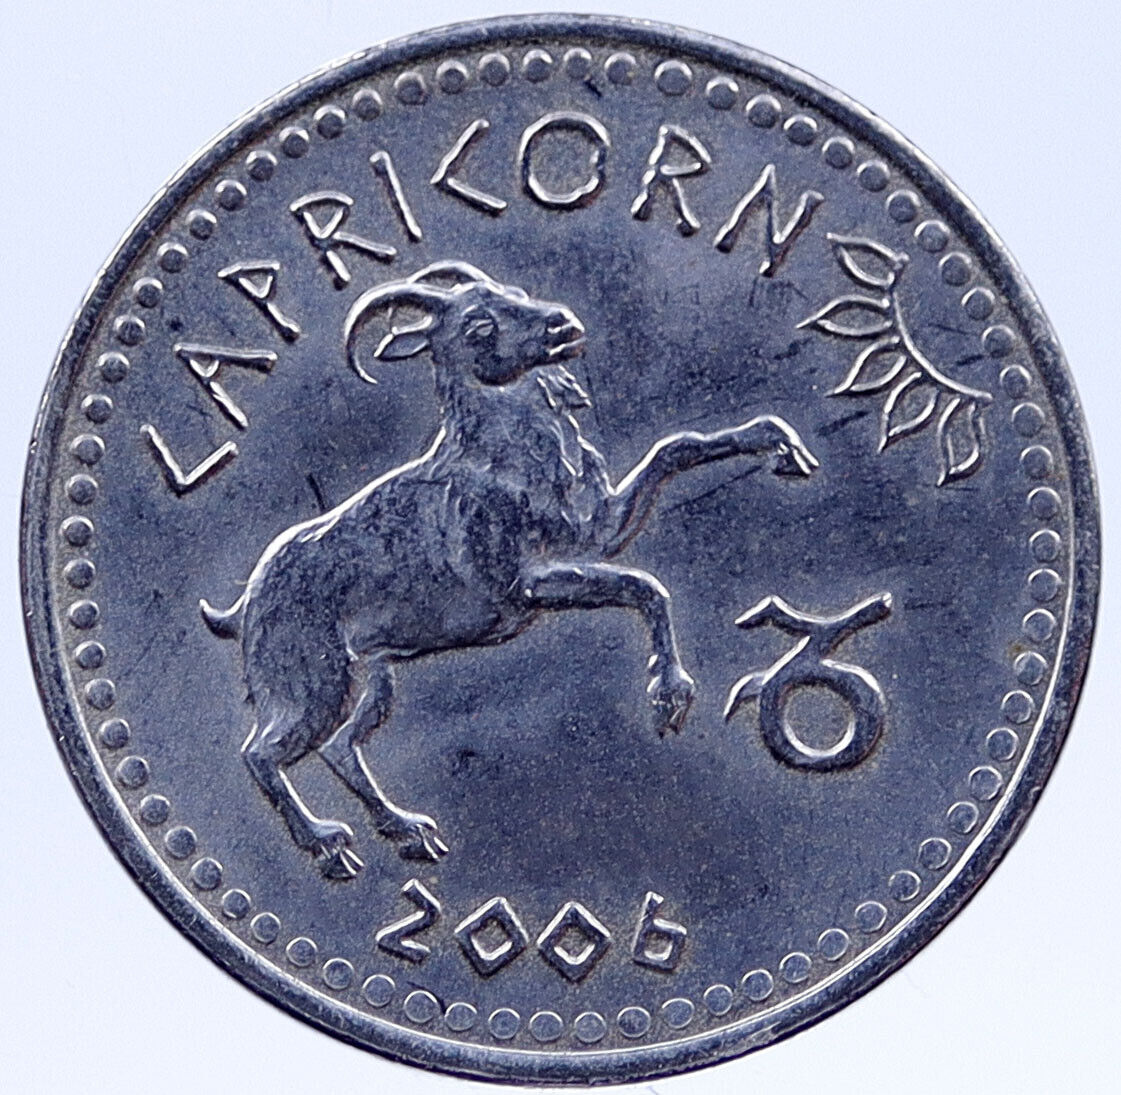 2006 SOMALILAND Africa CAPRICORN ZODIAC SERIES 10 Shillings Coin i119356